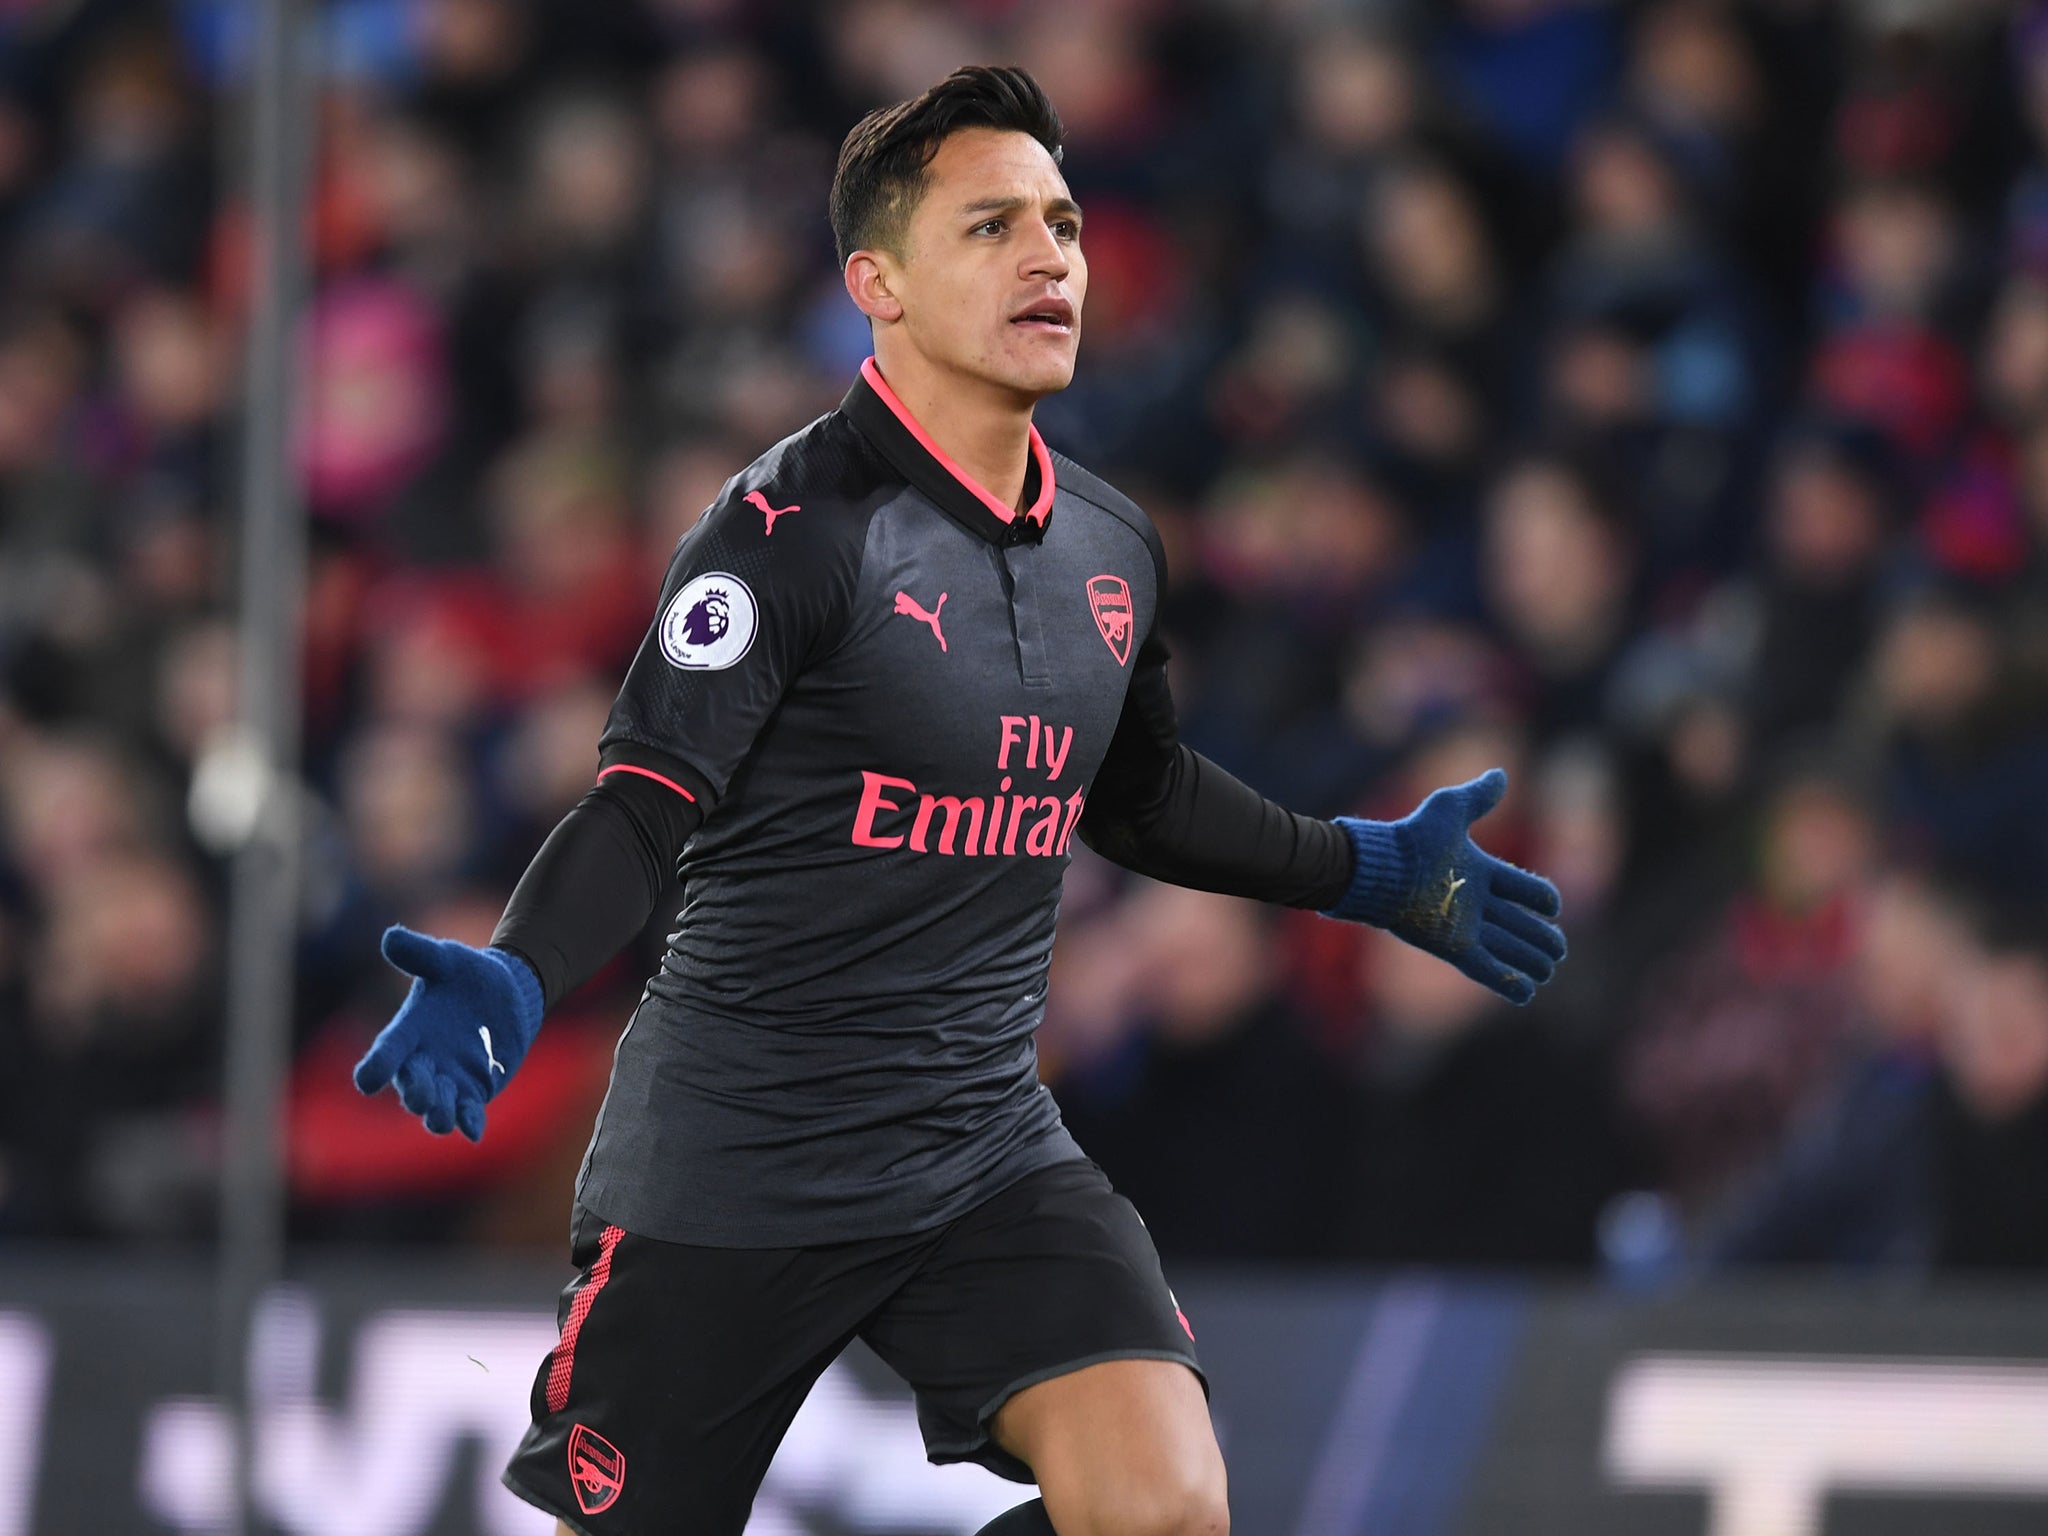 Alexis Sanchez scored twice as Arsenal beat Crystal Palace 3-2